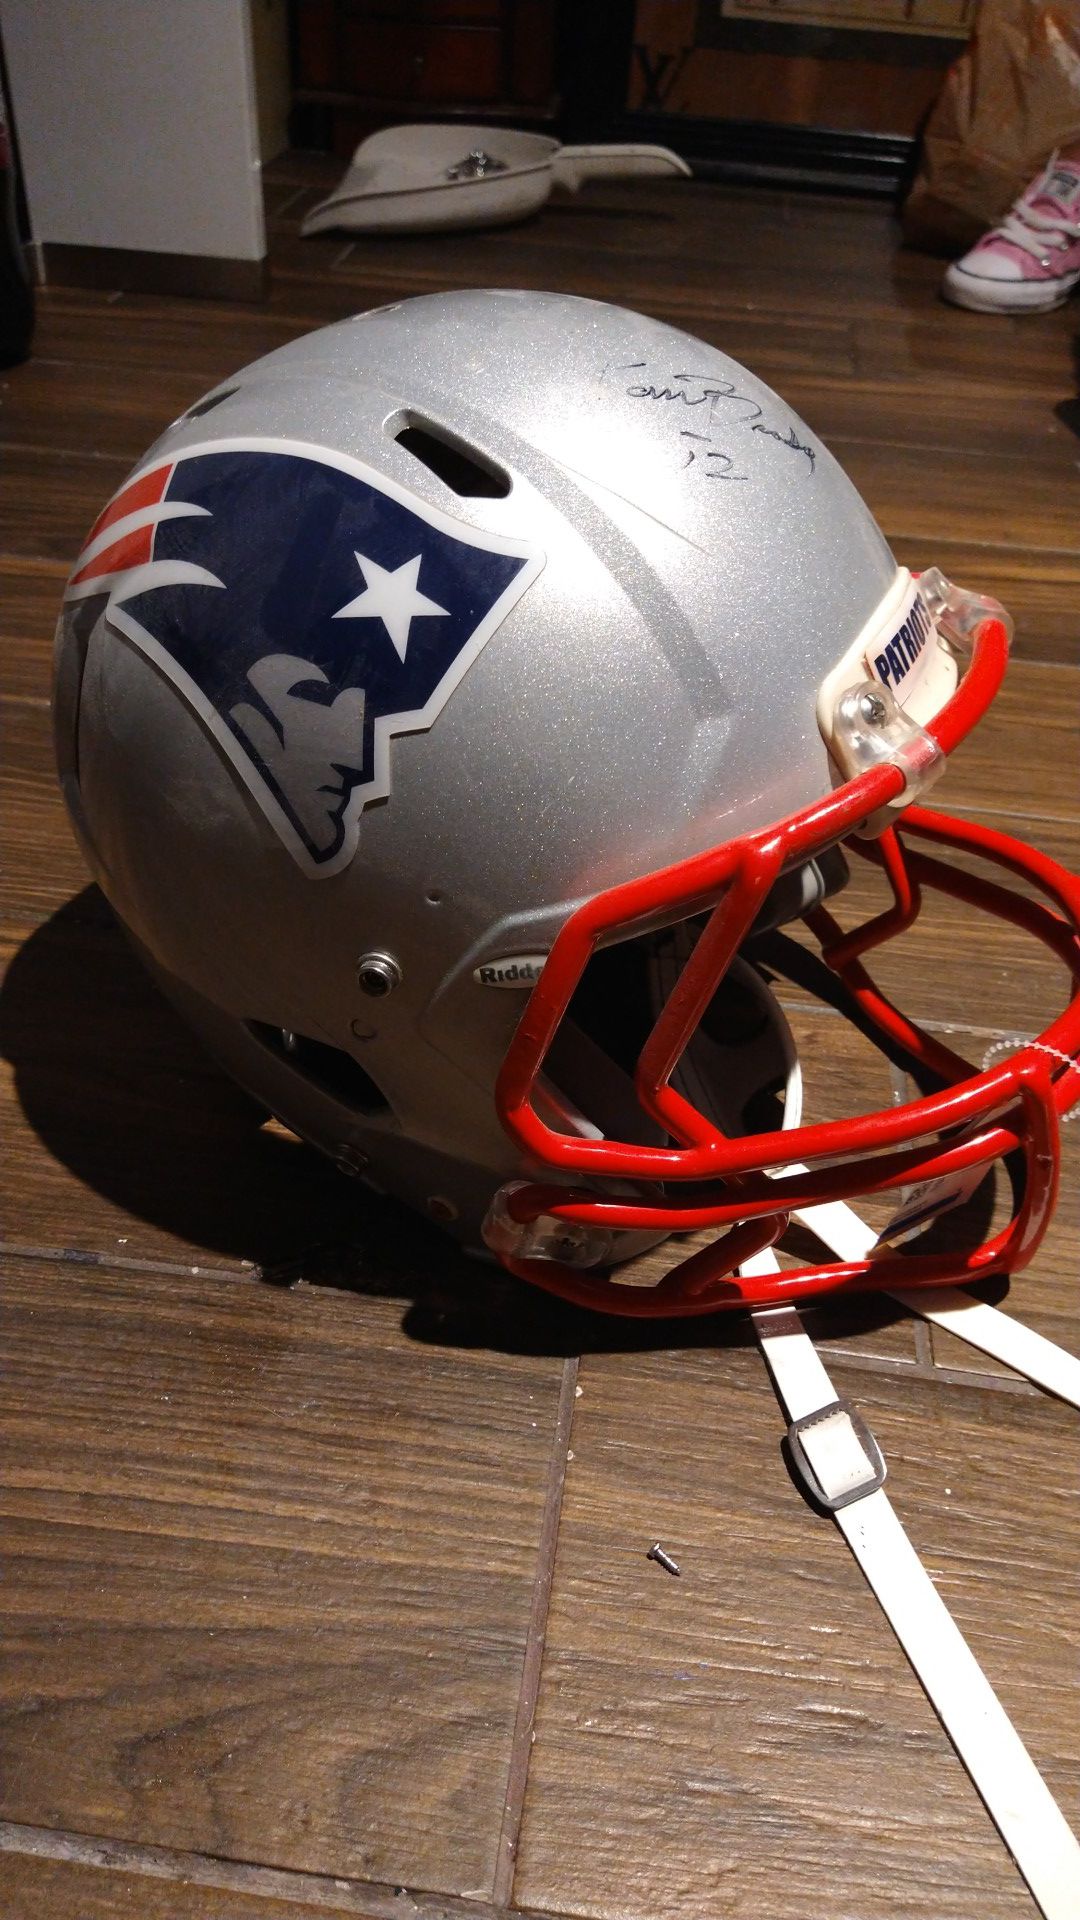 New England Patriots Helmet (most likely replica)